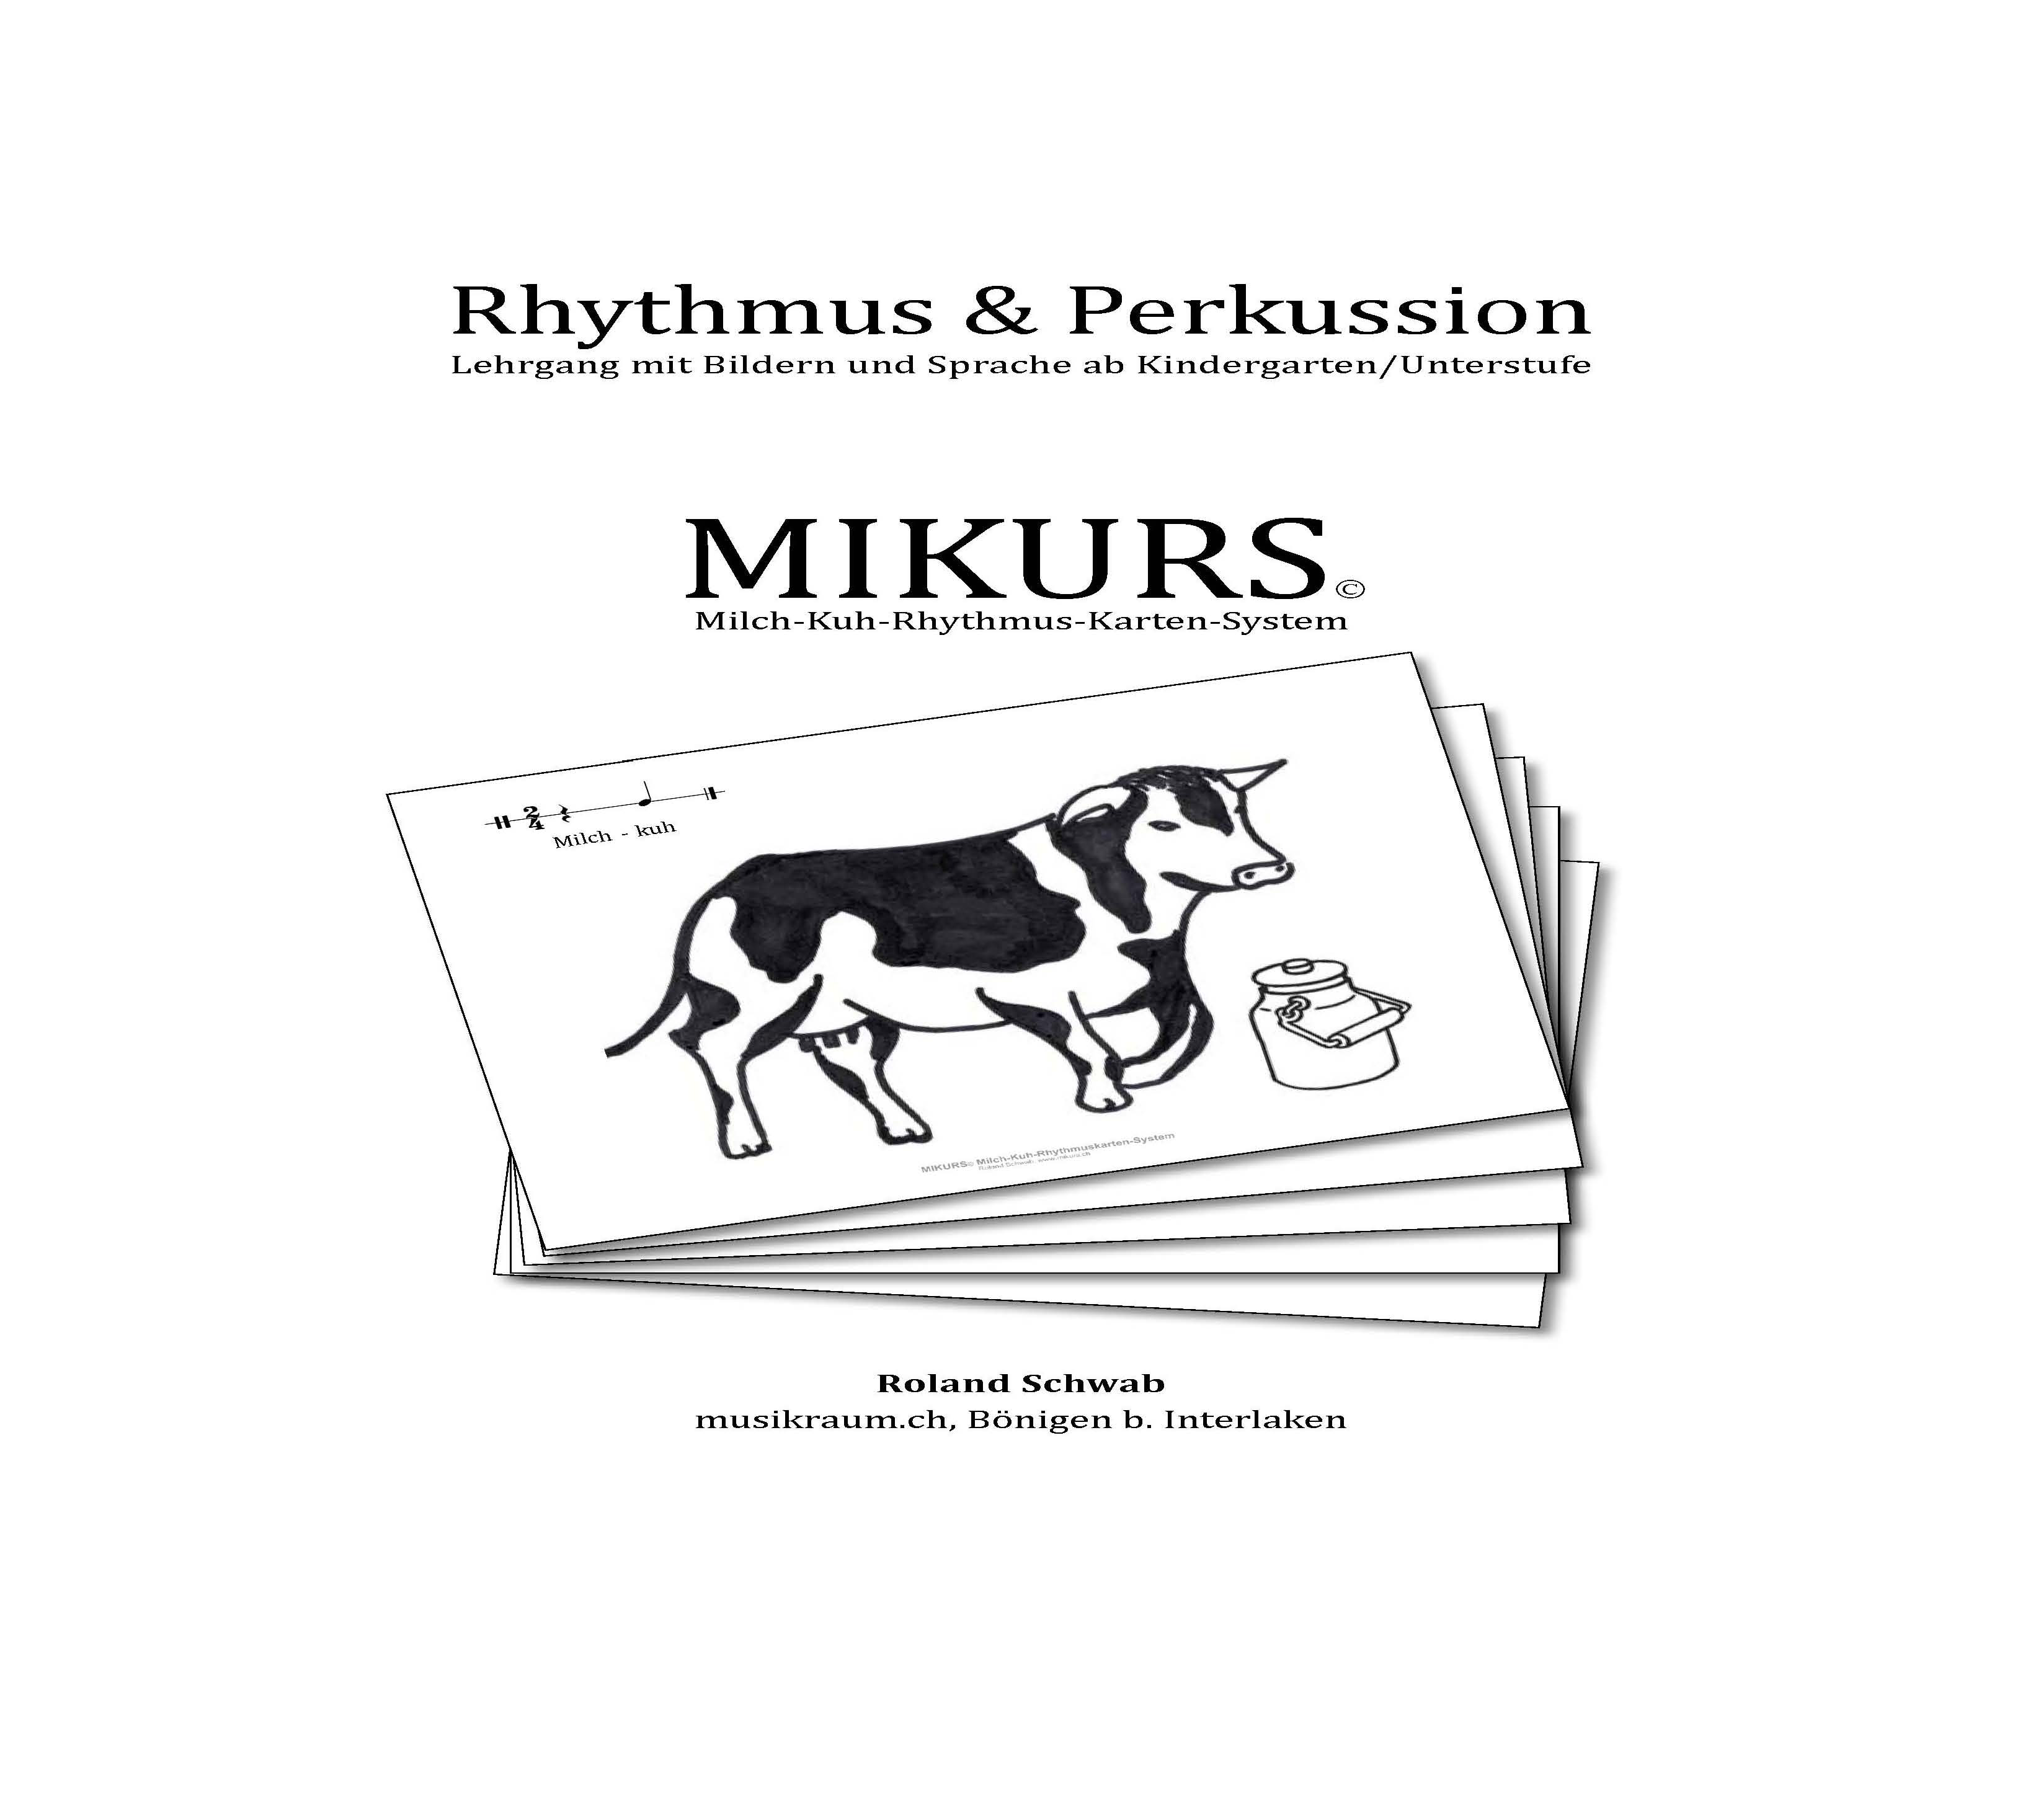 MIKURS Perkussions-Lehrgang ab Kindergarten